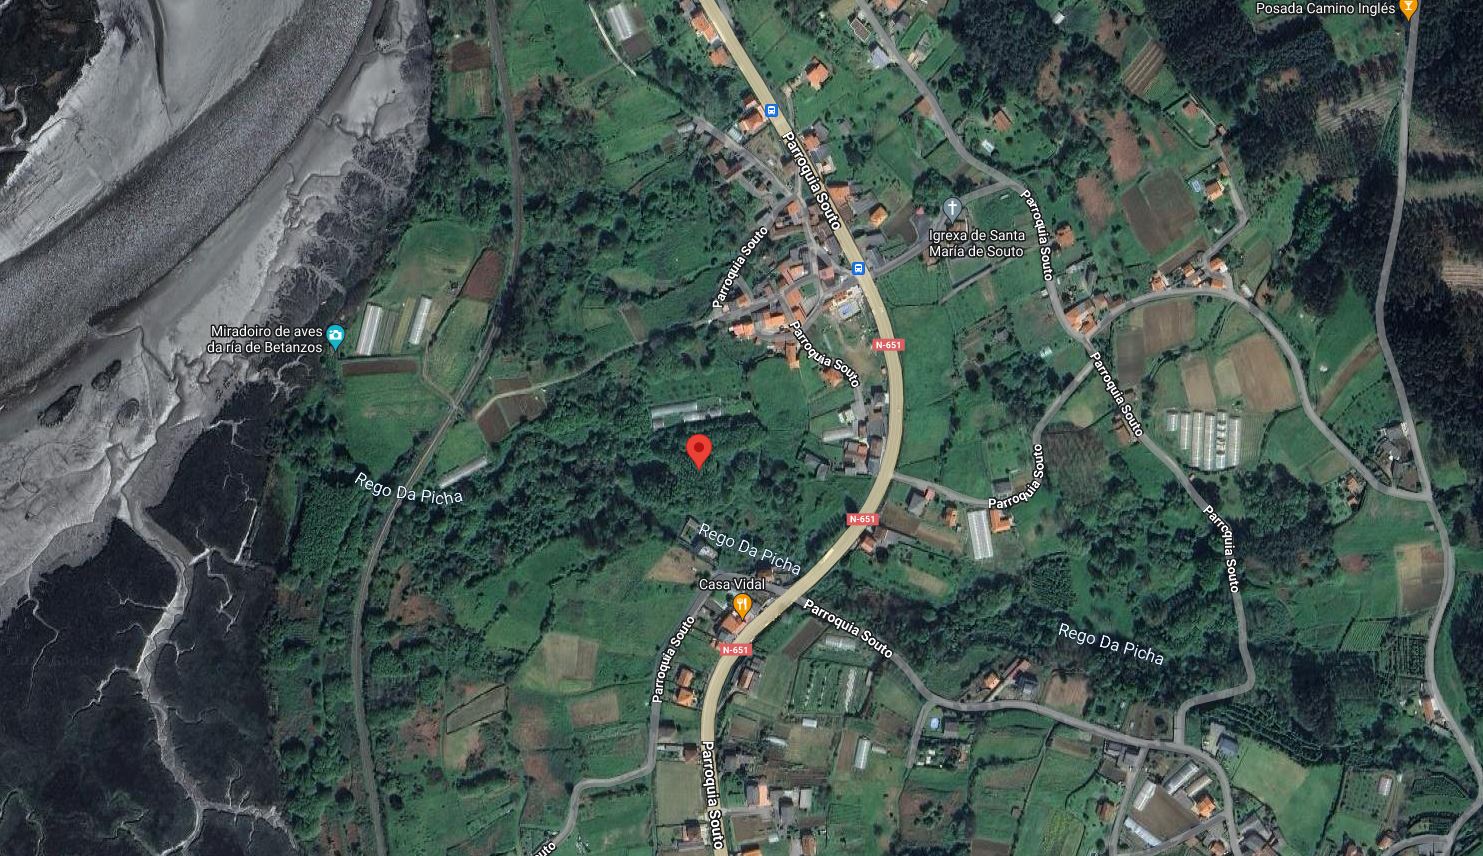 Terreno rústico en lugar de A Granxa, parroquia de Souto, de Paderne (A Coruña).